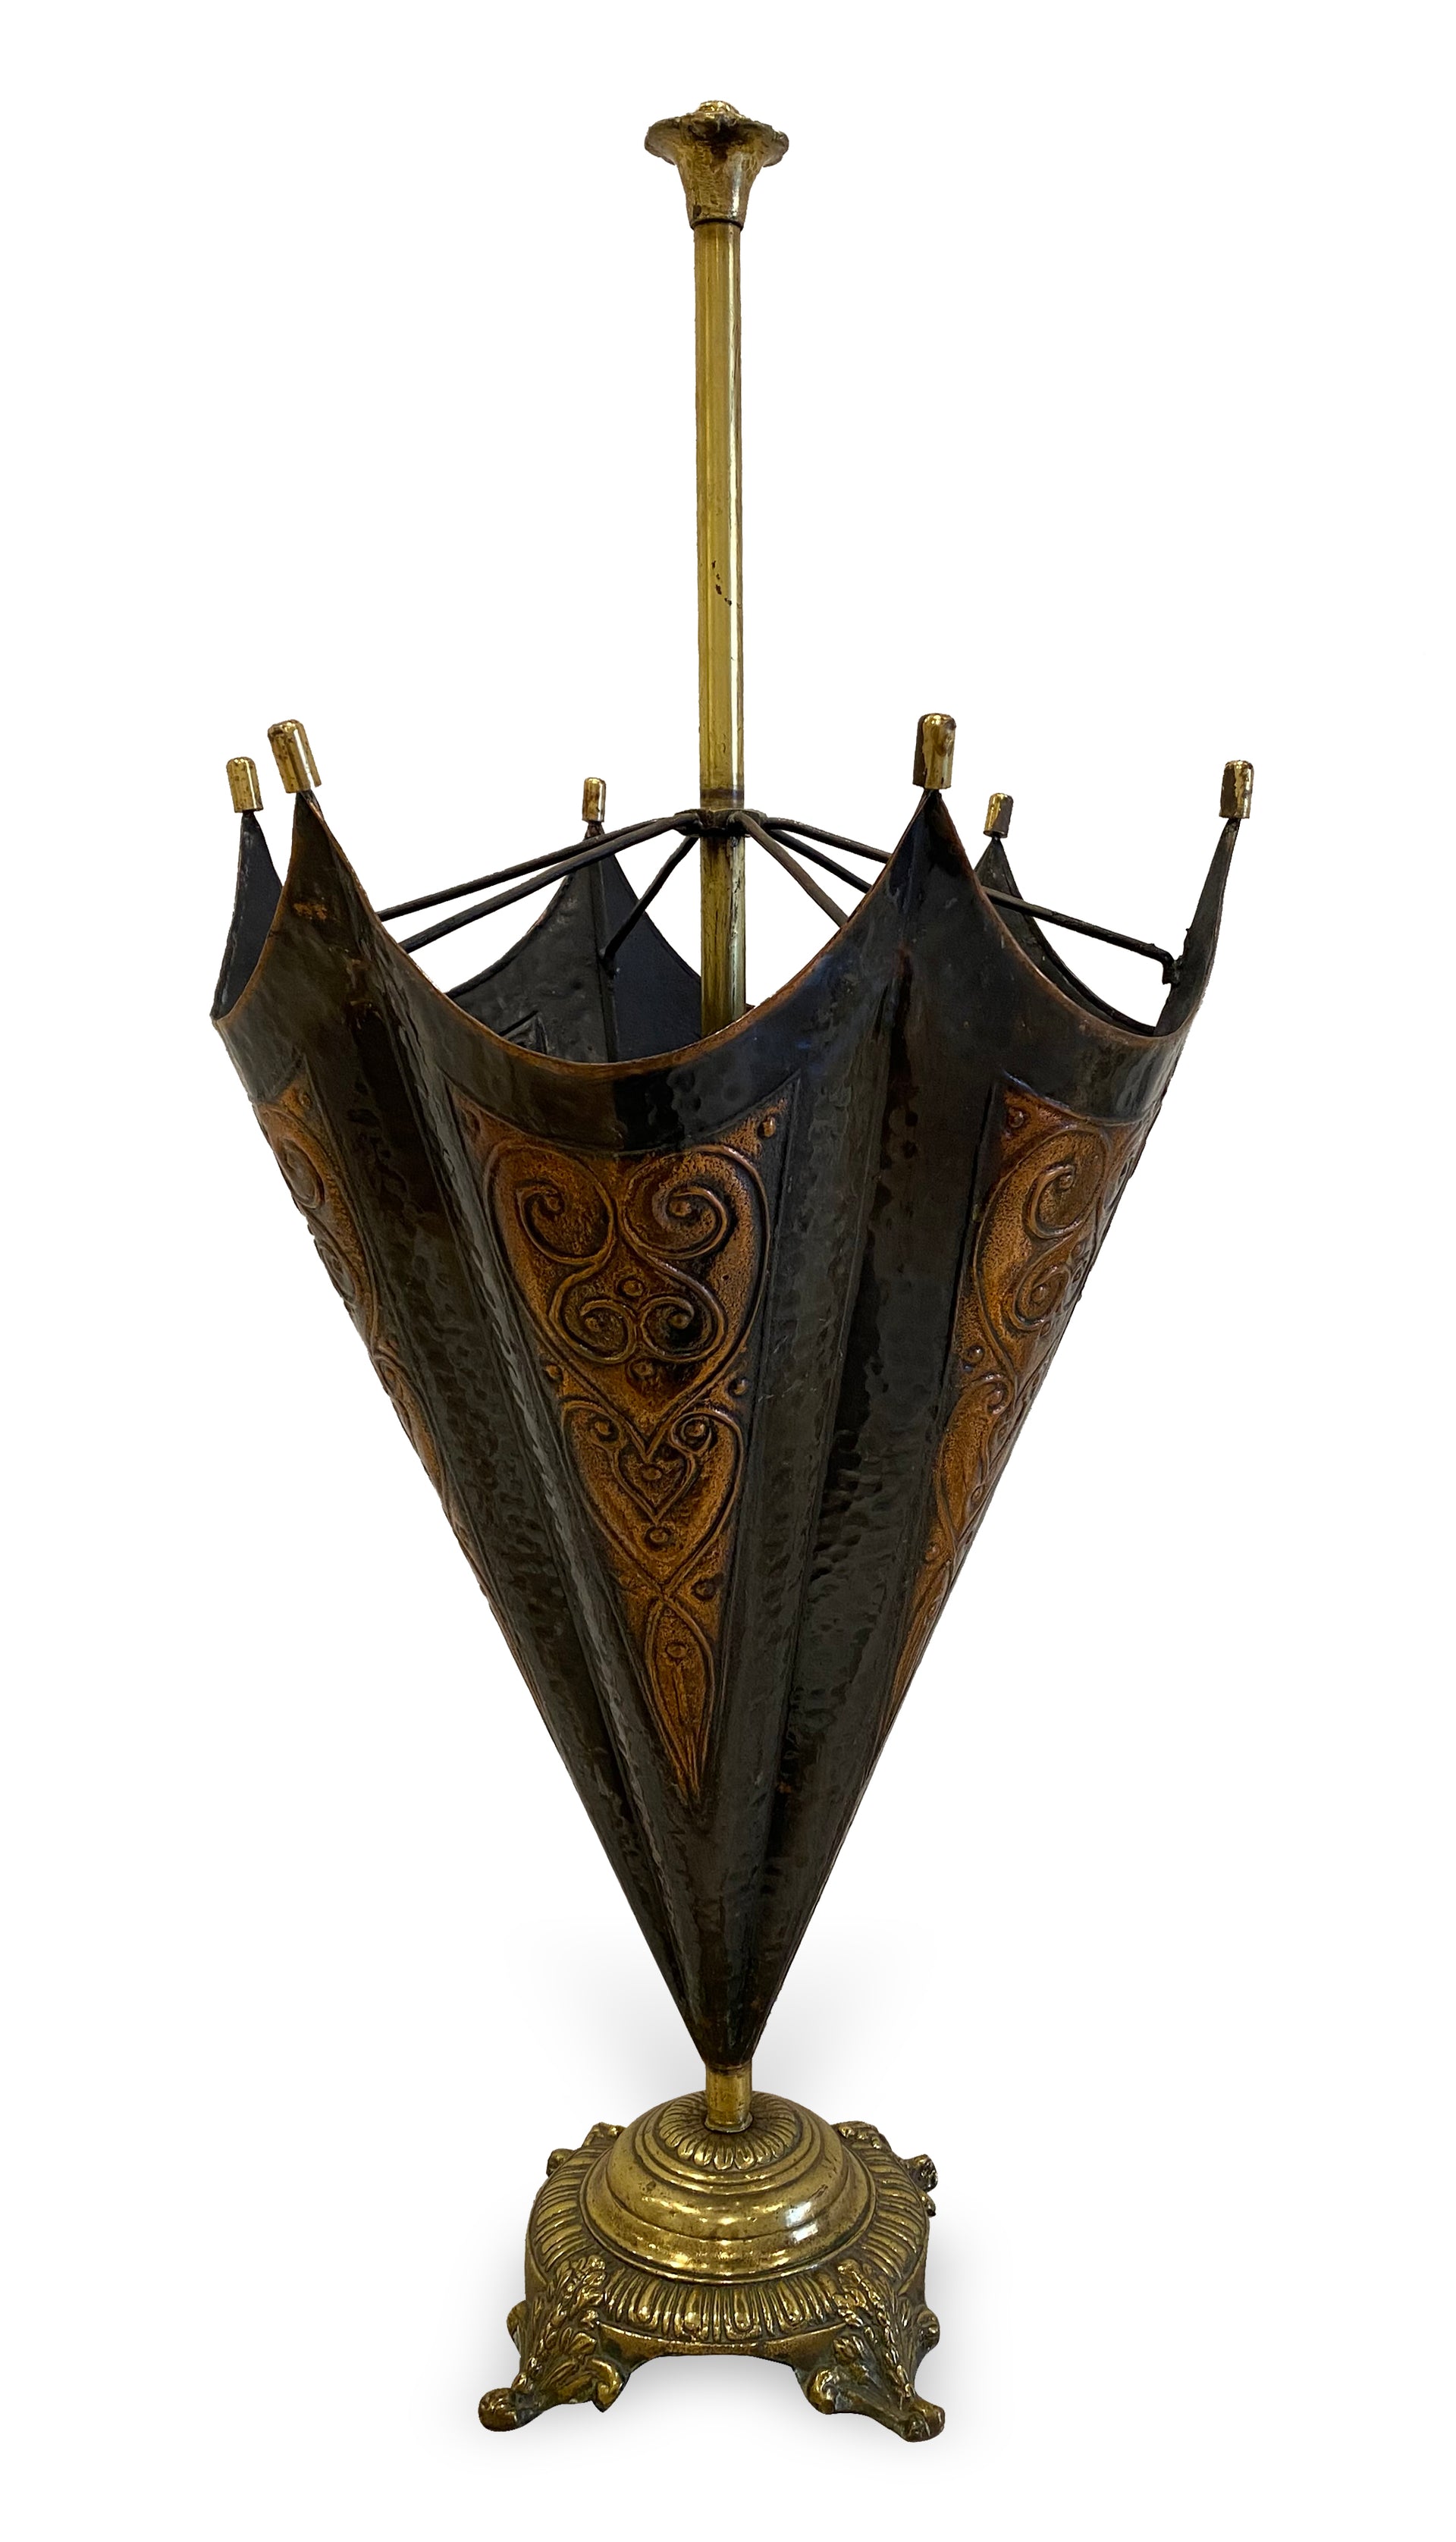 SOLD A stylish Art-Nouveau brass and copper umbrella stand, French Circa 1900